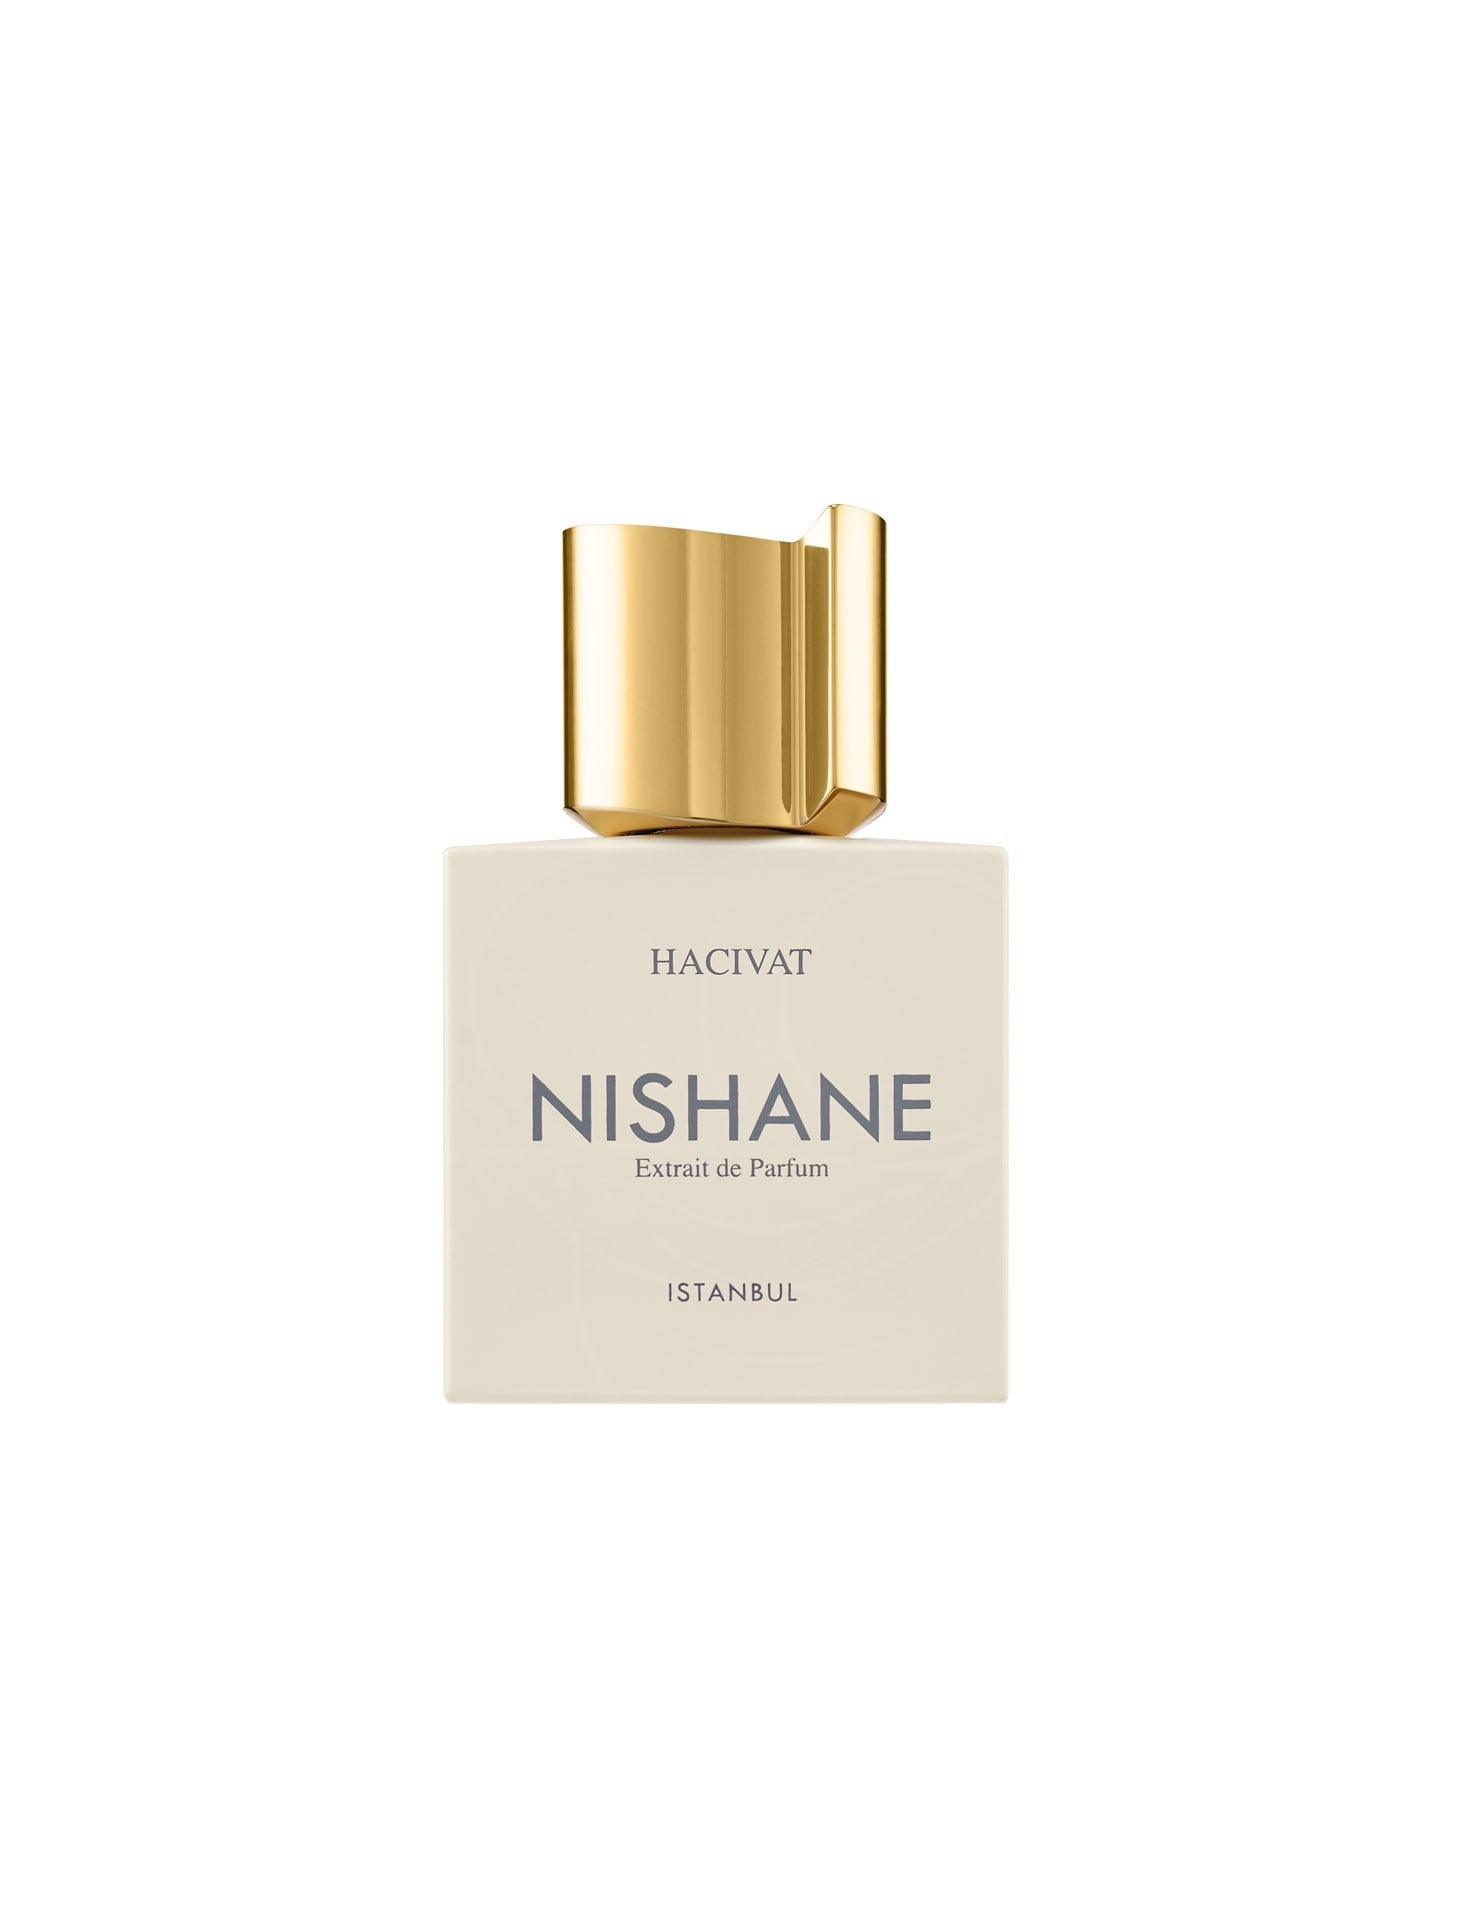 Nishane Hacivat 50ml Extrait de Parfum